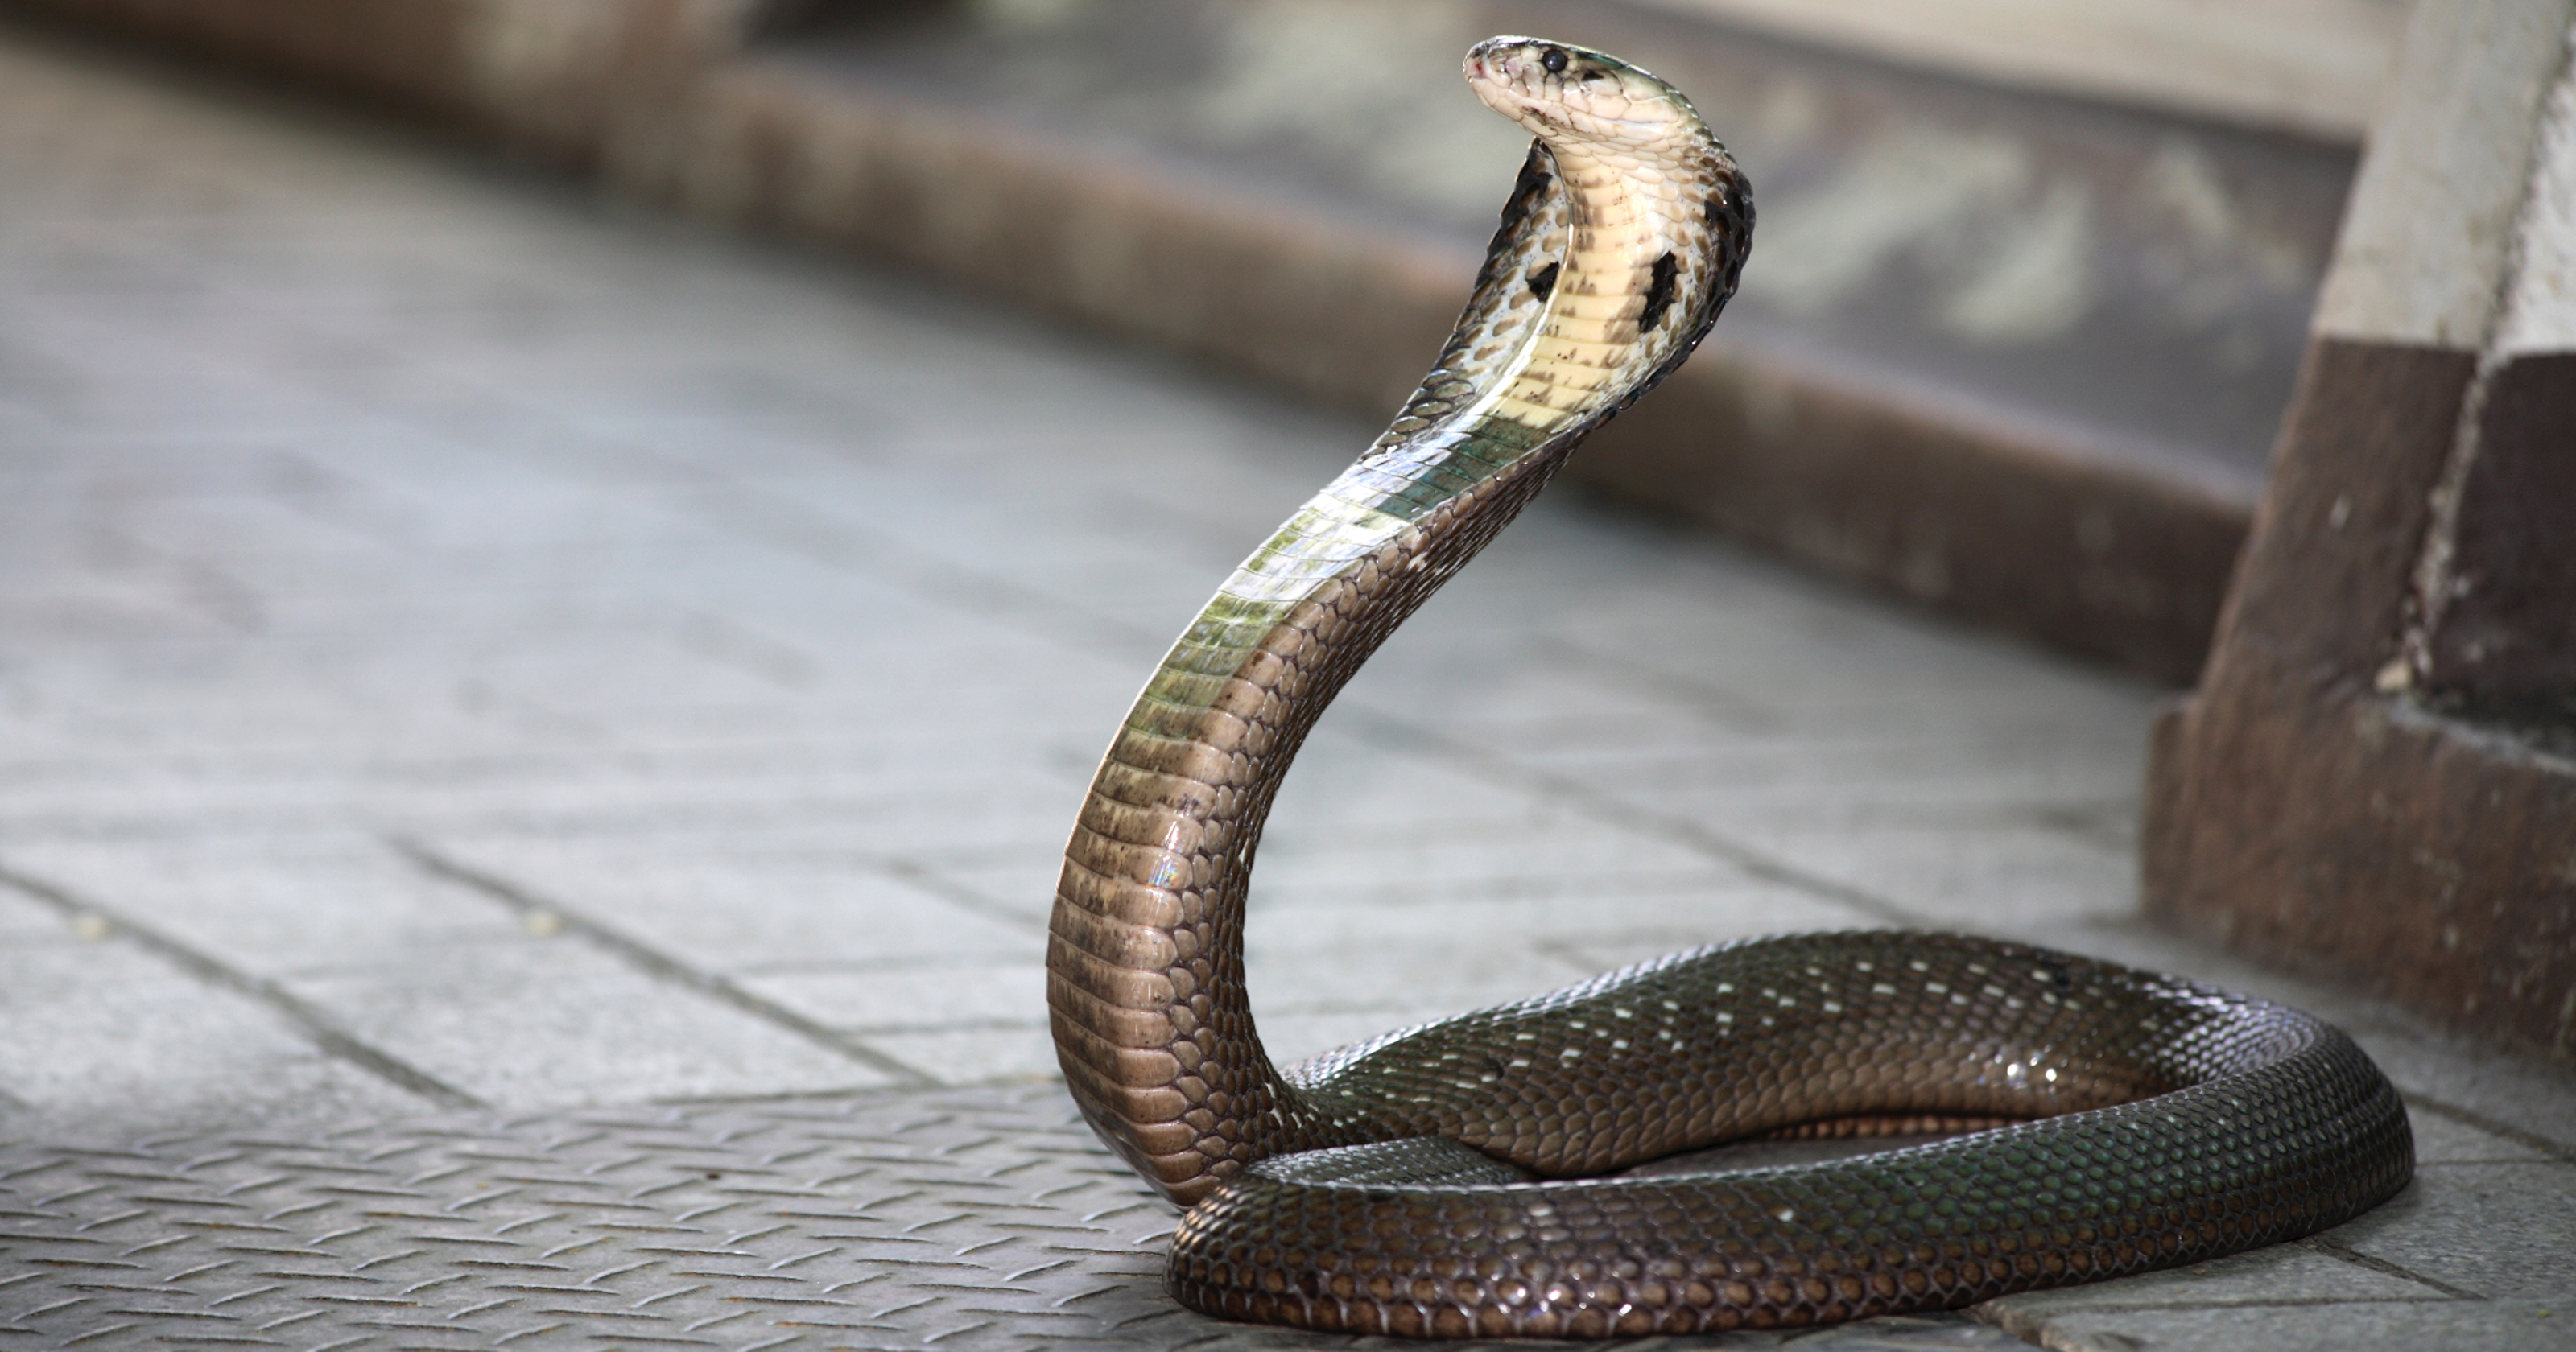 Florida To Crack Down On Cobras